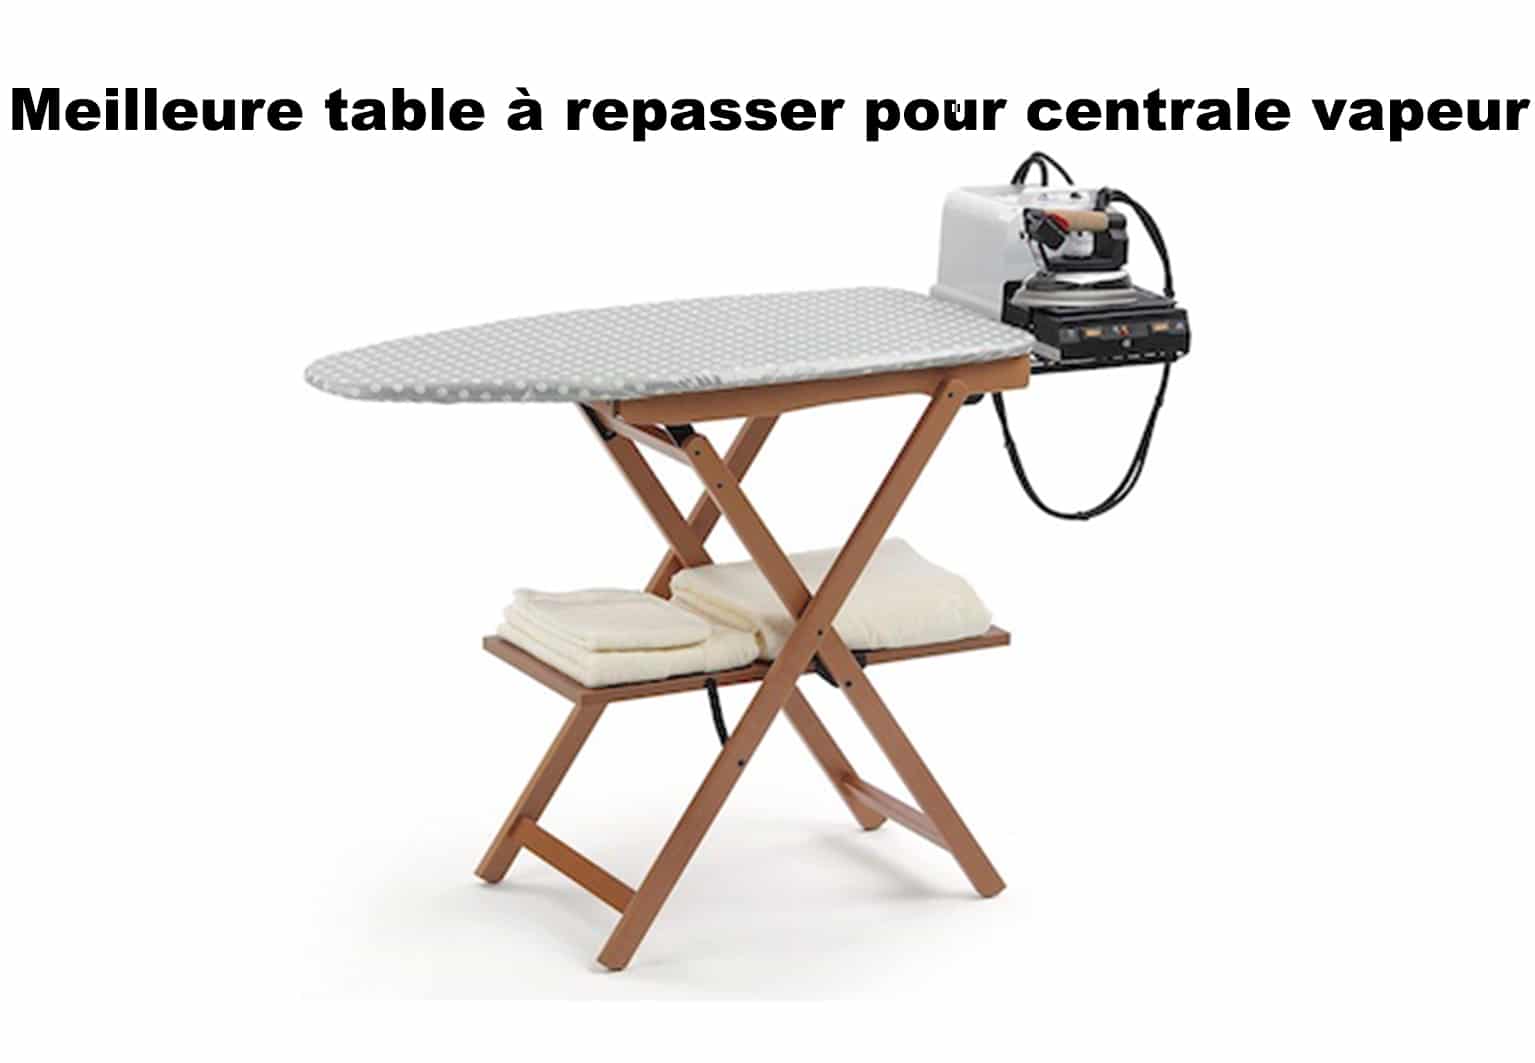 Centrale vapeur table a repasser - Cdiscount